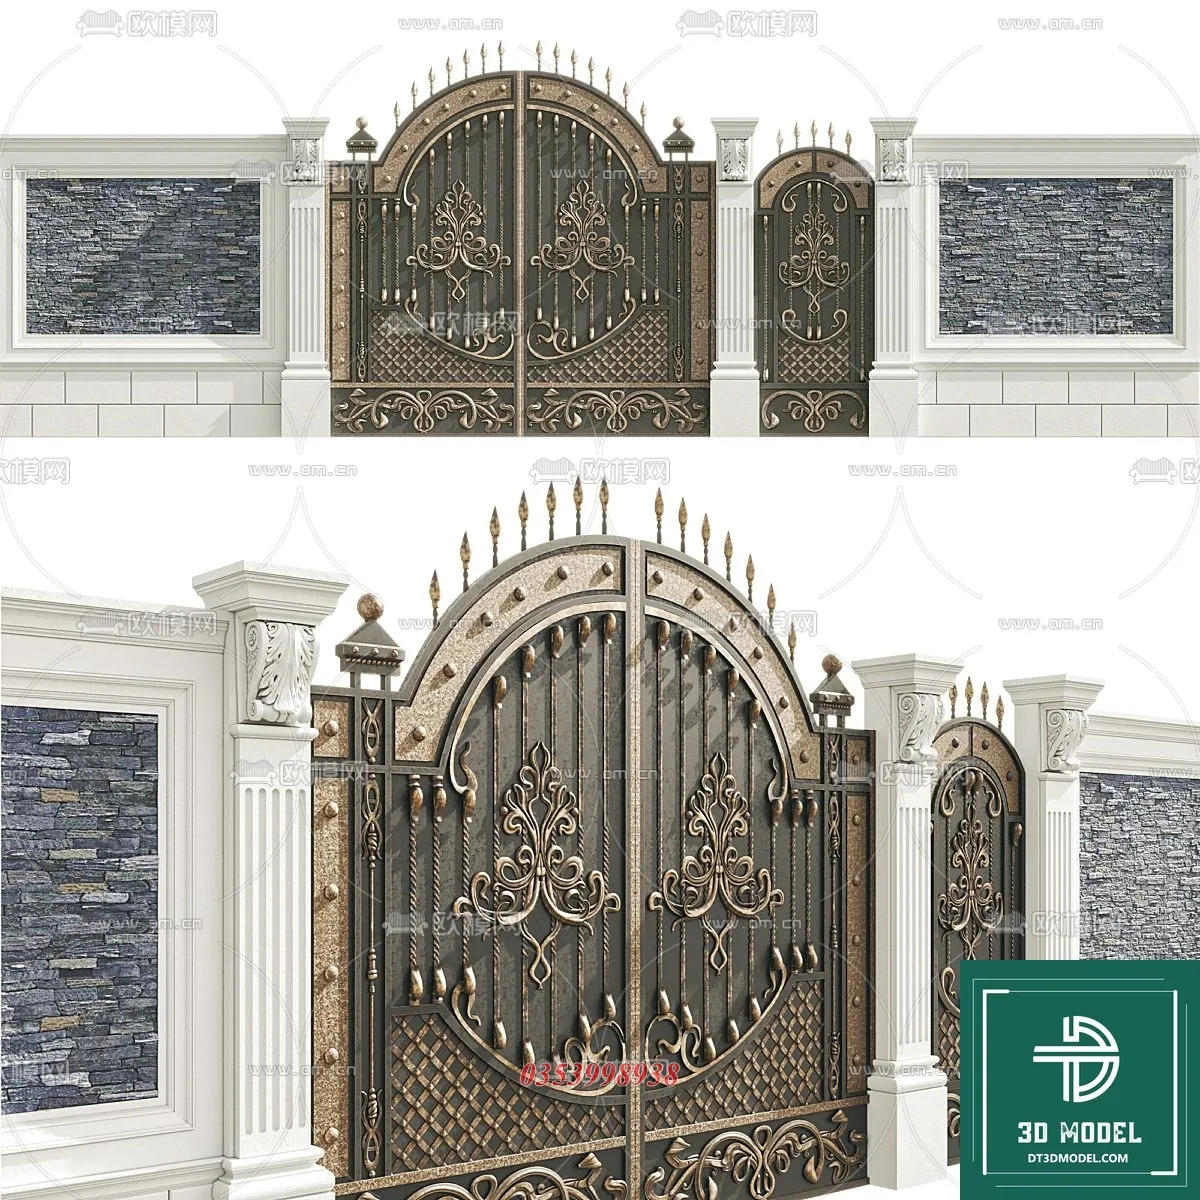 CLASSIC GATE – 3D MODELS – 101